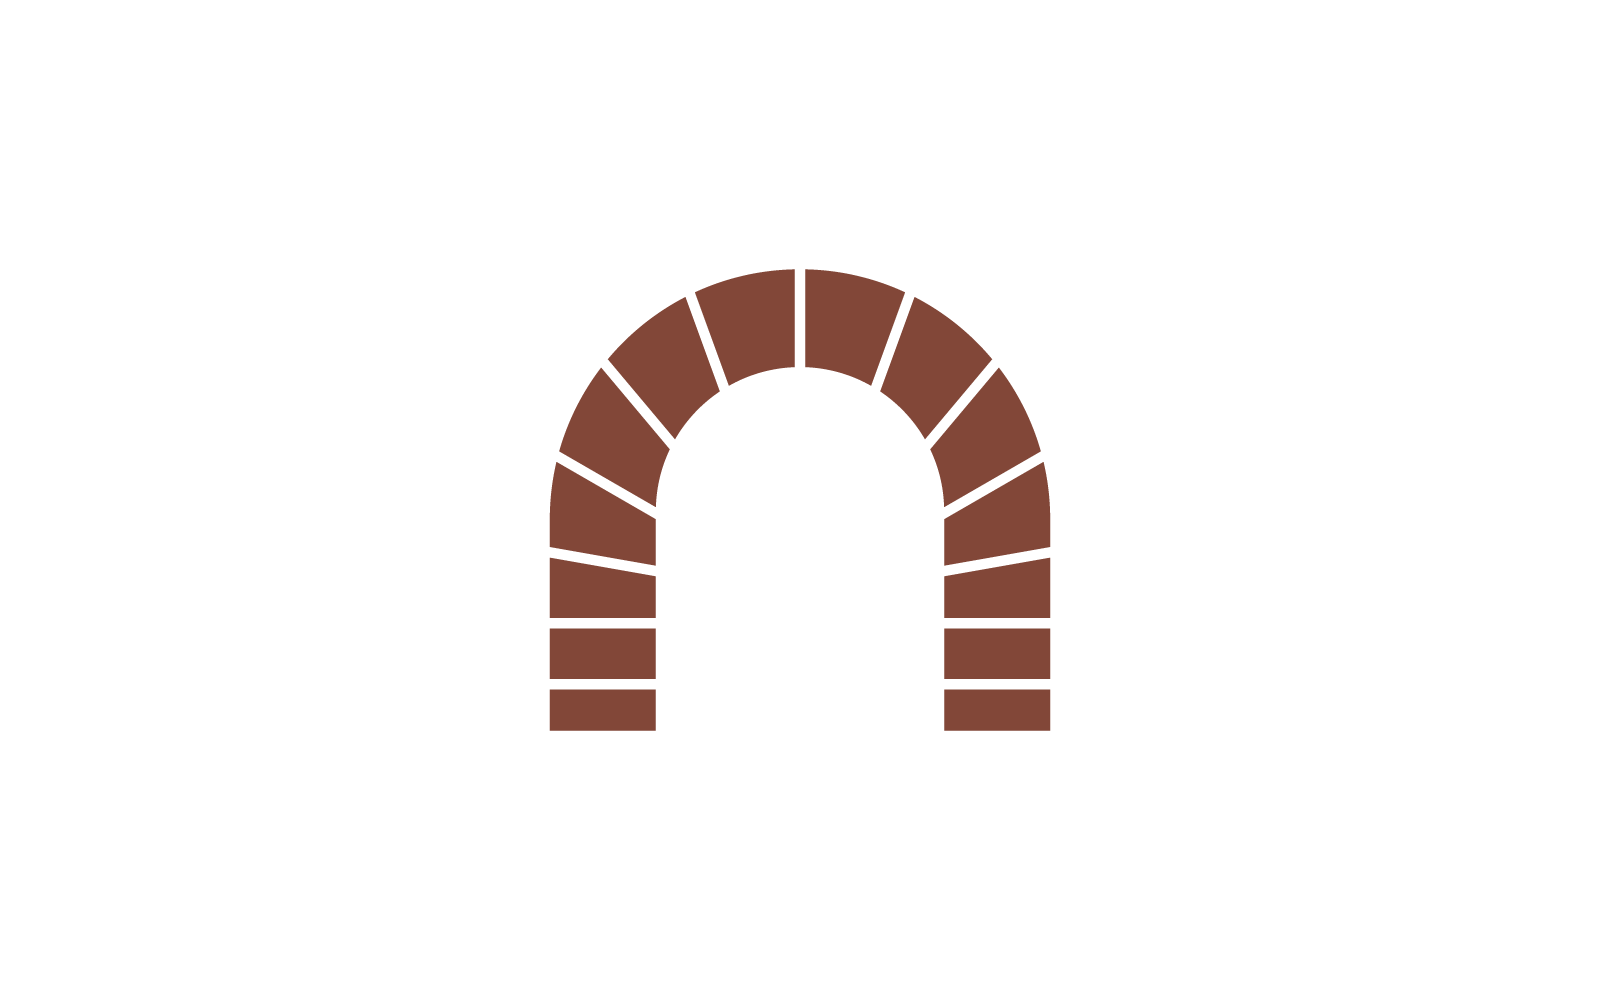 Brick bridge logo vector design ilustration